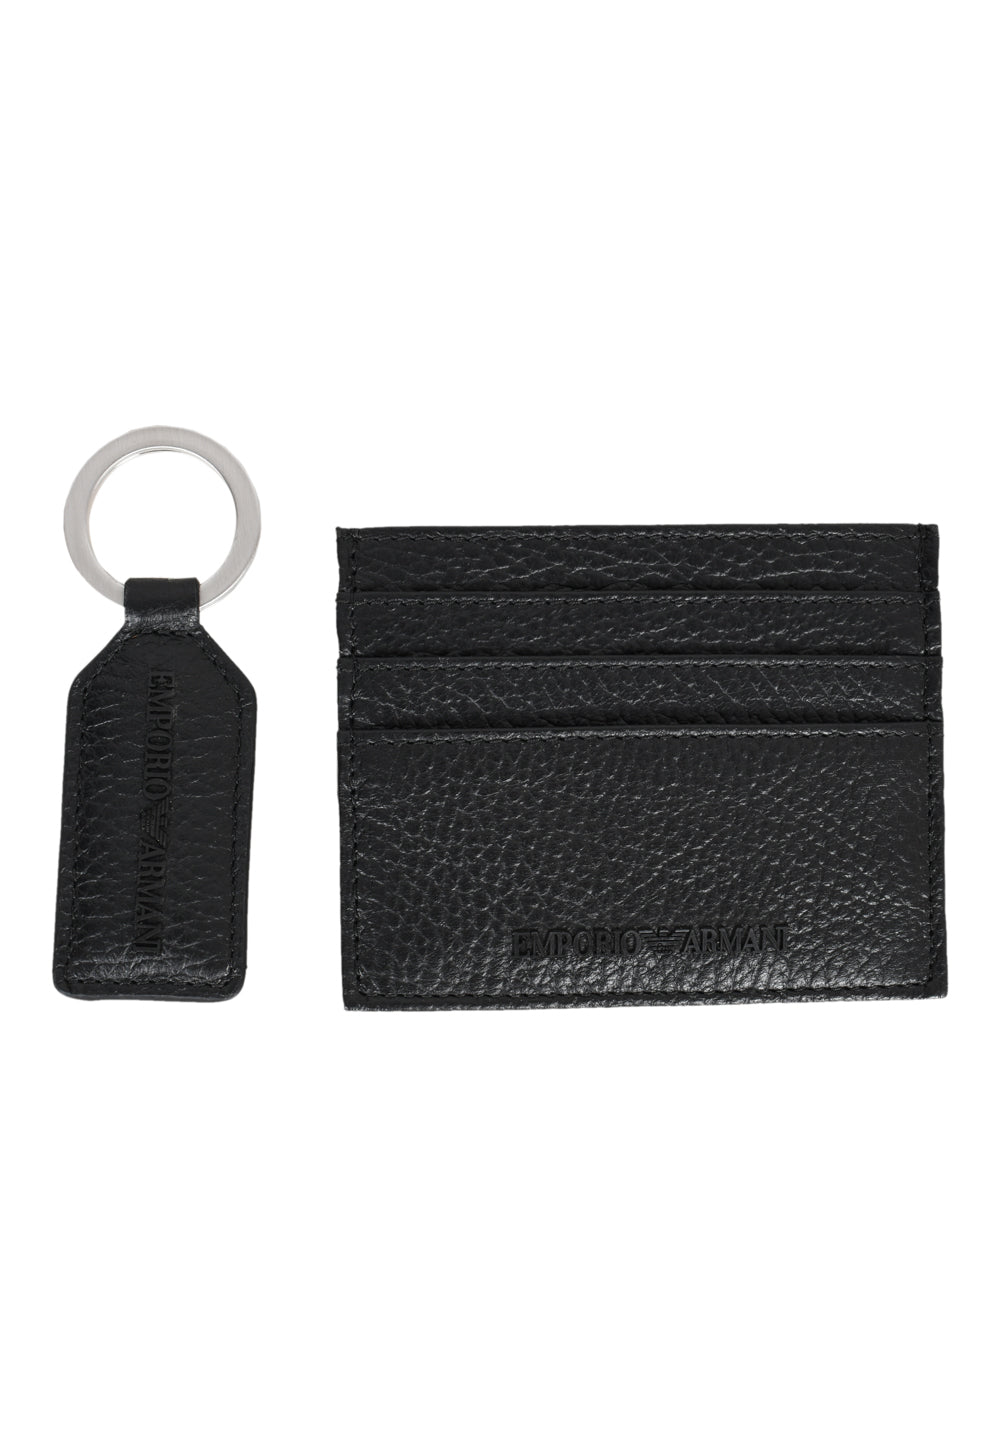 Emporio Armani logo-embossed leather cardholder and keyring